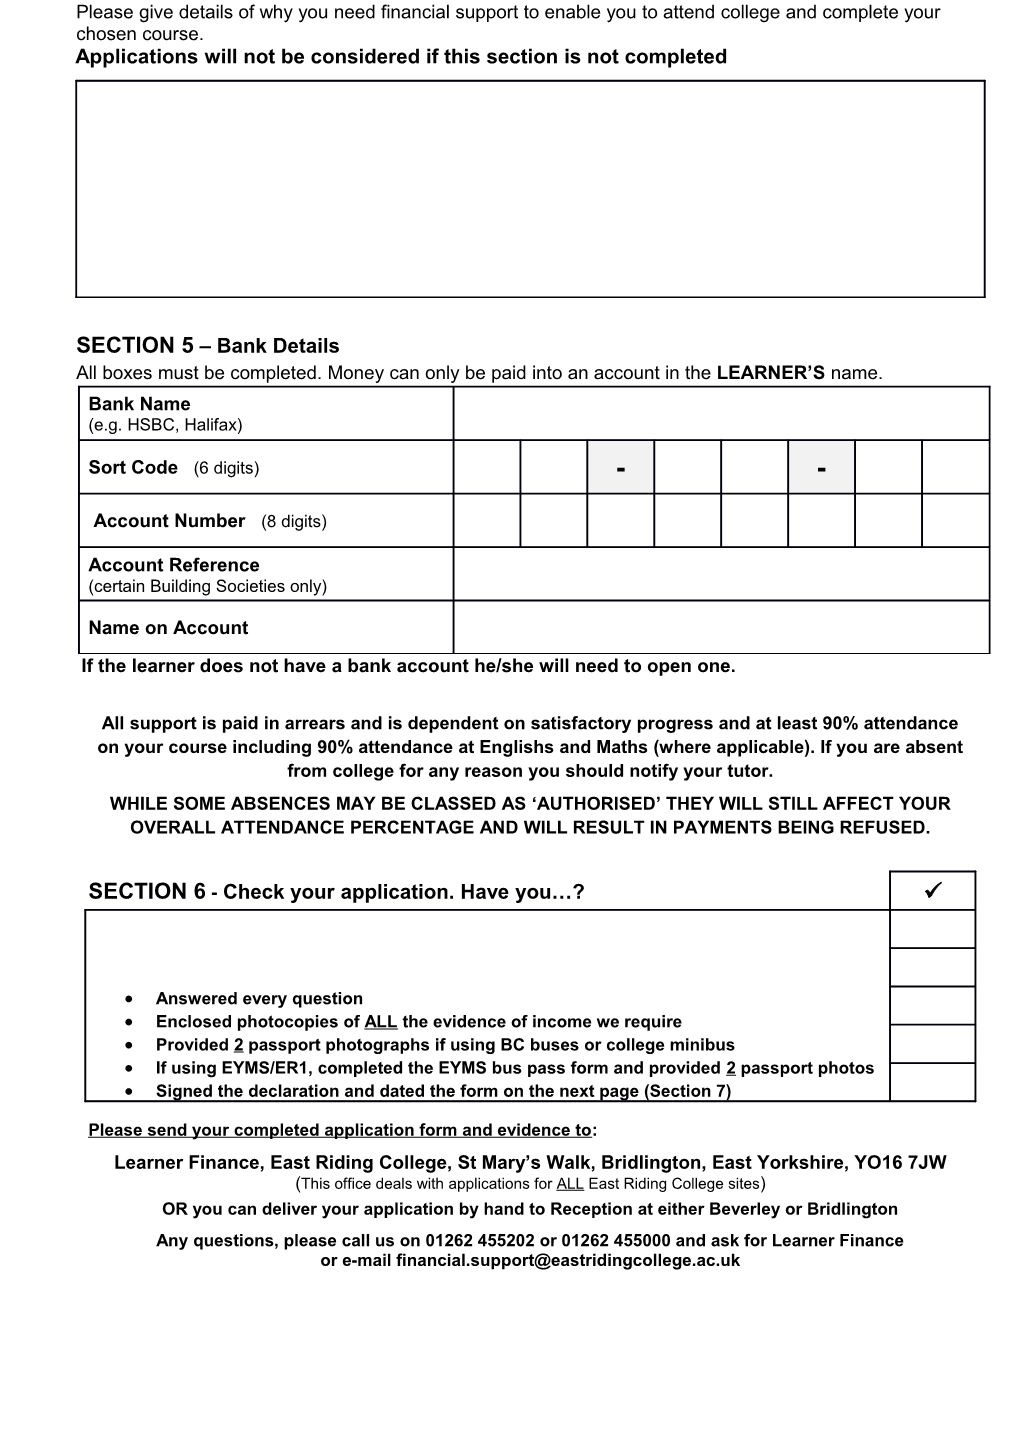 16-19 Bursary Fund Application Form